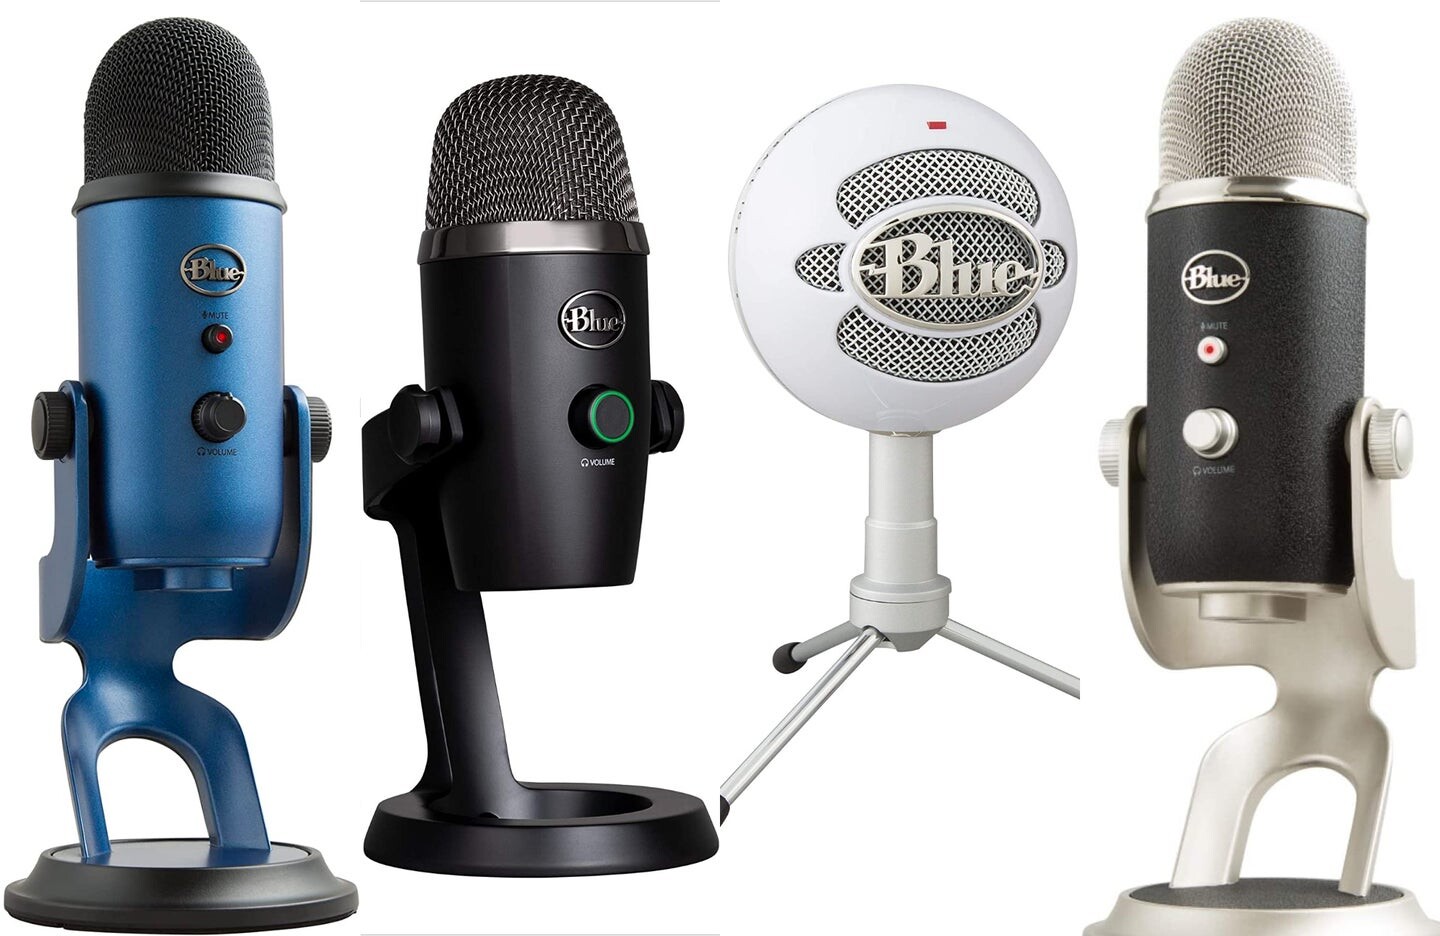 Logitech Retiring Blue Microphones Brand, Gaming Line Absorbing Yeti +  Snowball Mics & ASTRO Audio Gear